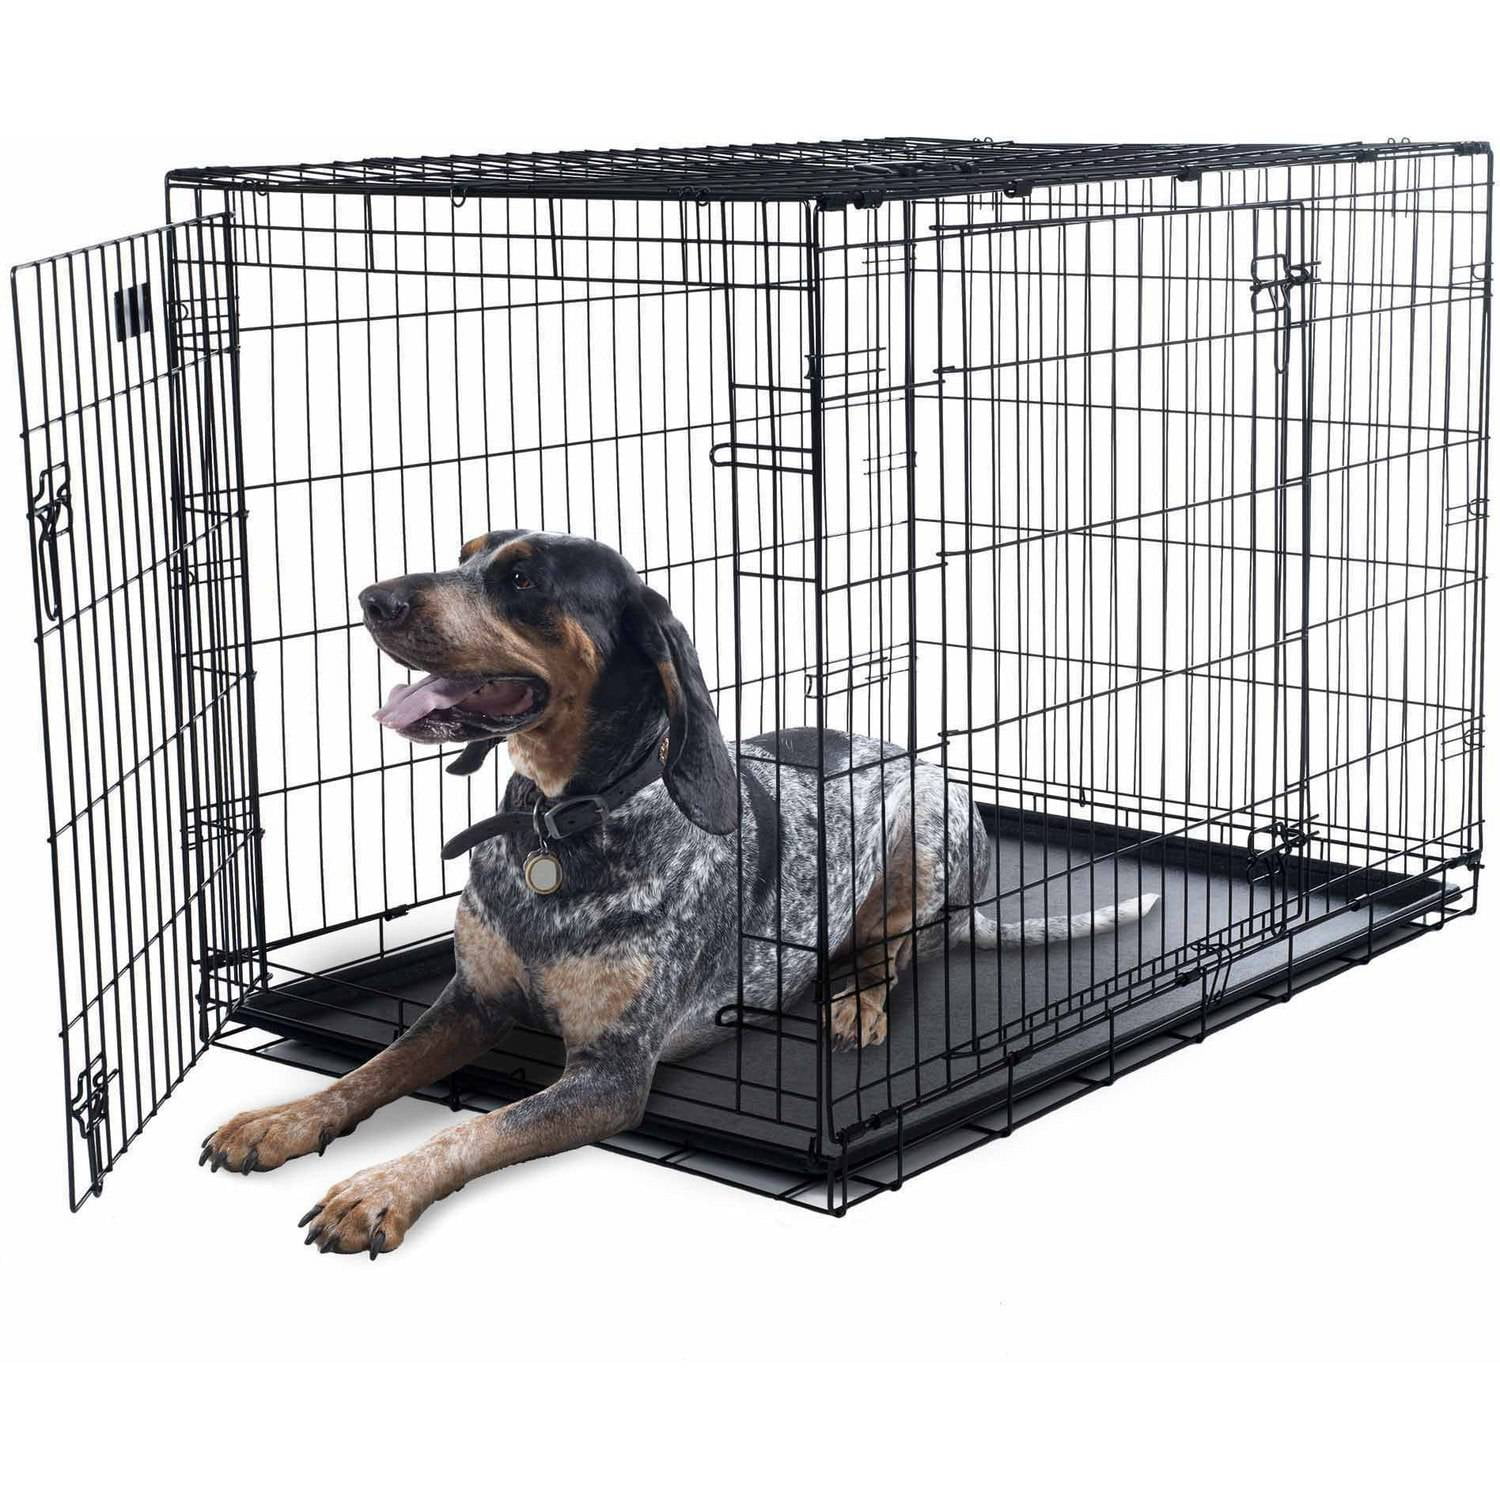 42 dog crate